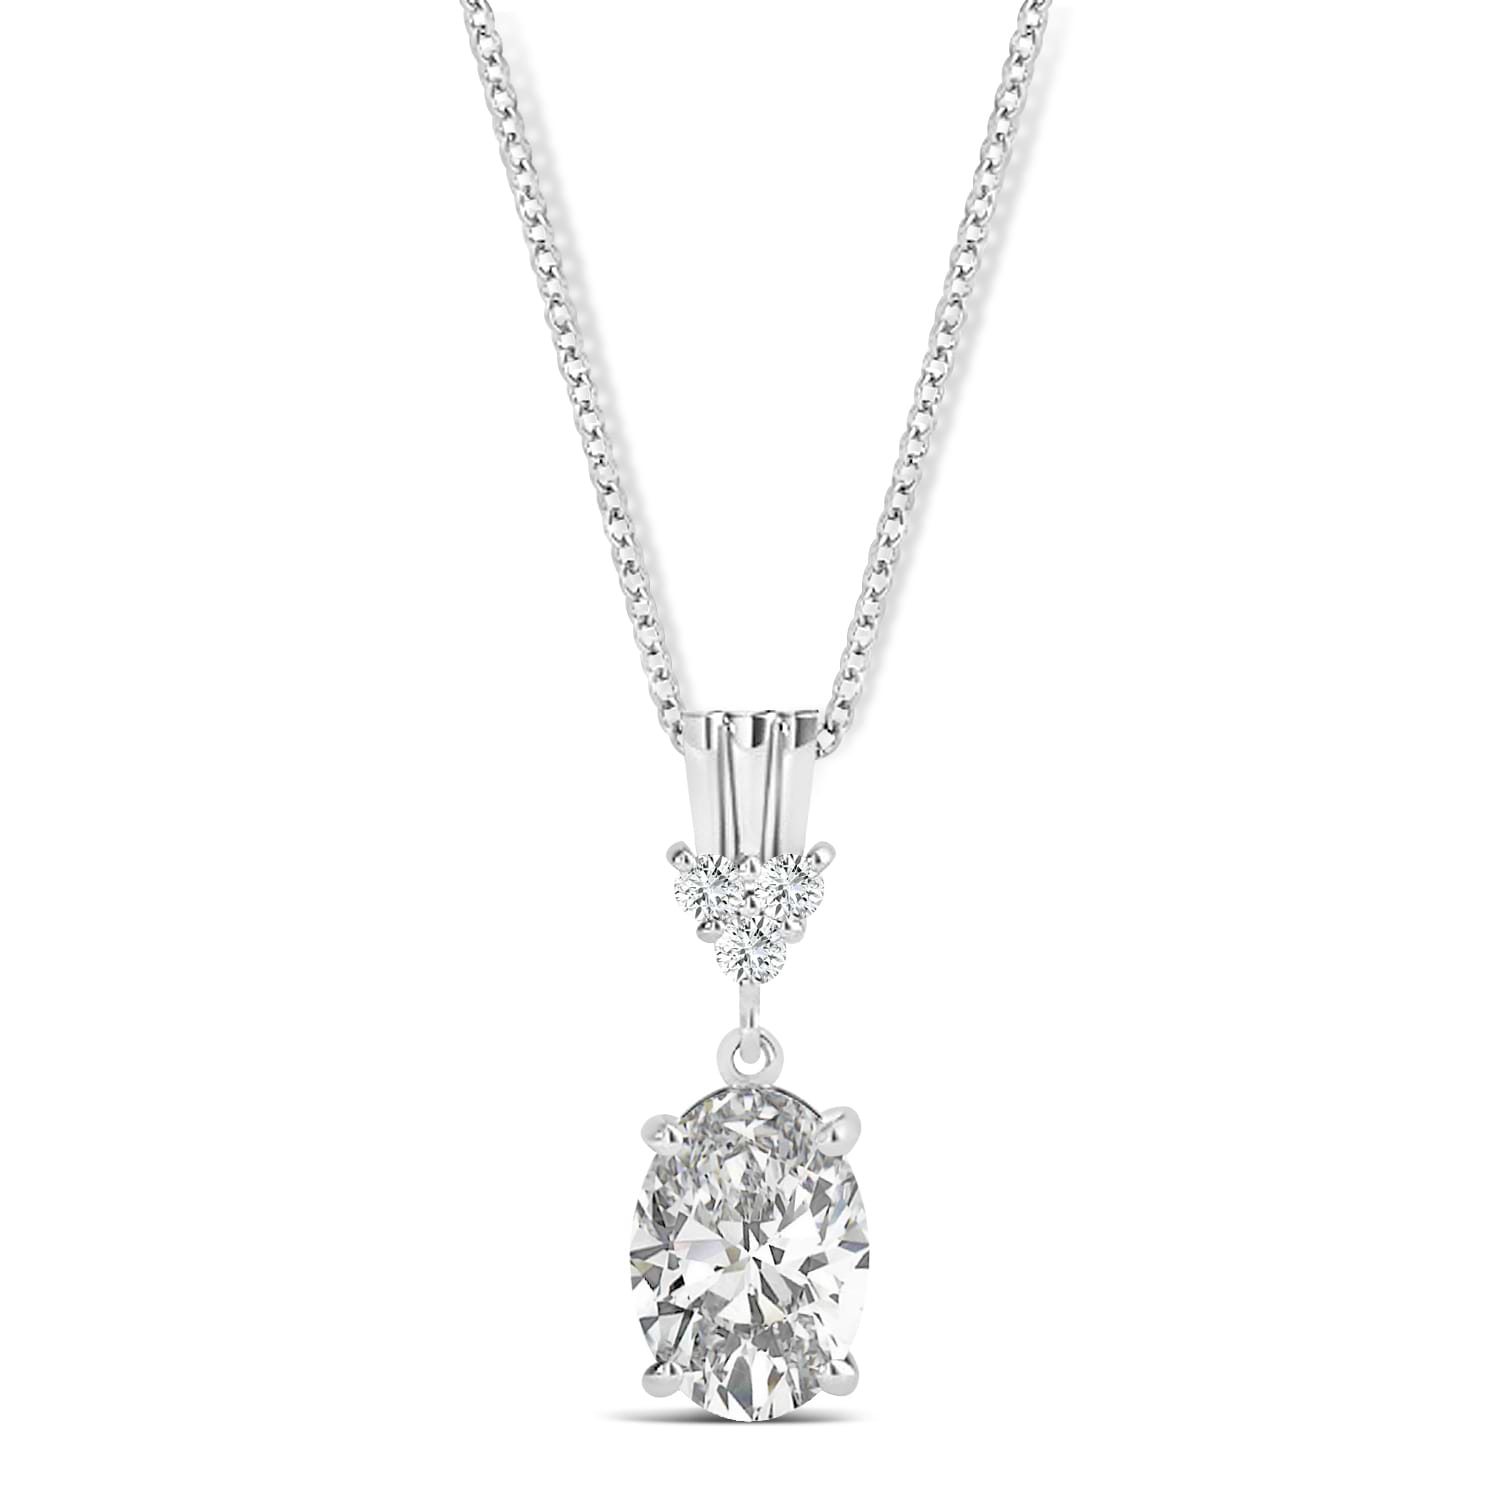 Oval Shape Diamond Pendant Necklace 14k White Gold (0.80ct)